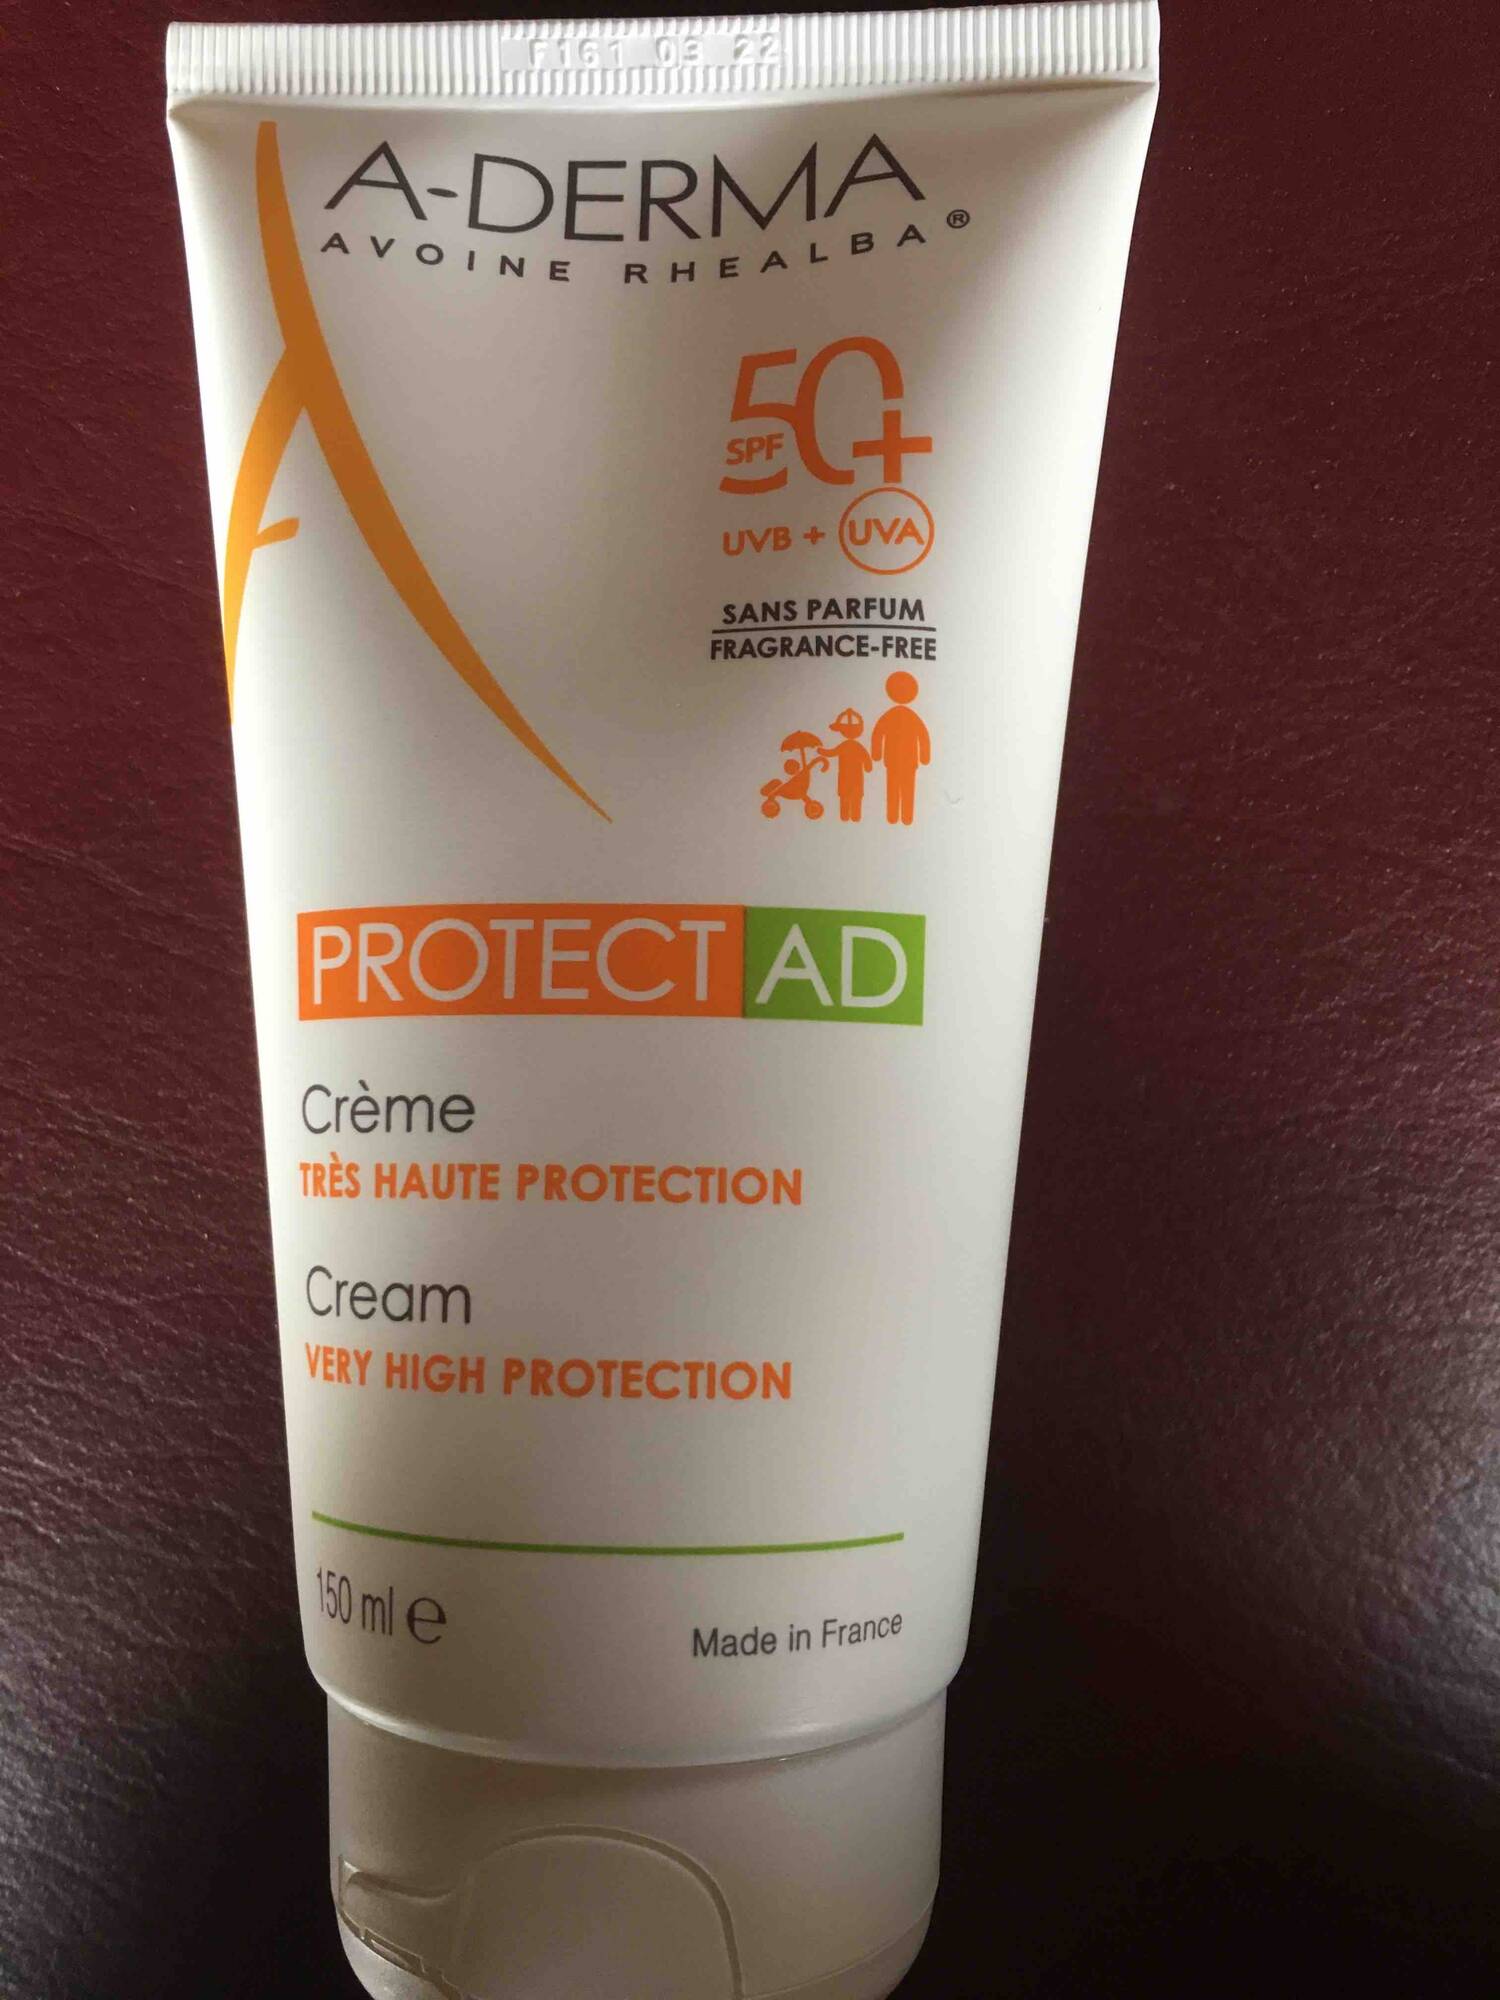 A-DERMA - Avoine rhealba Protect AD - Crème très haute protection SPF 50+